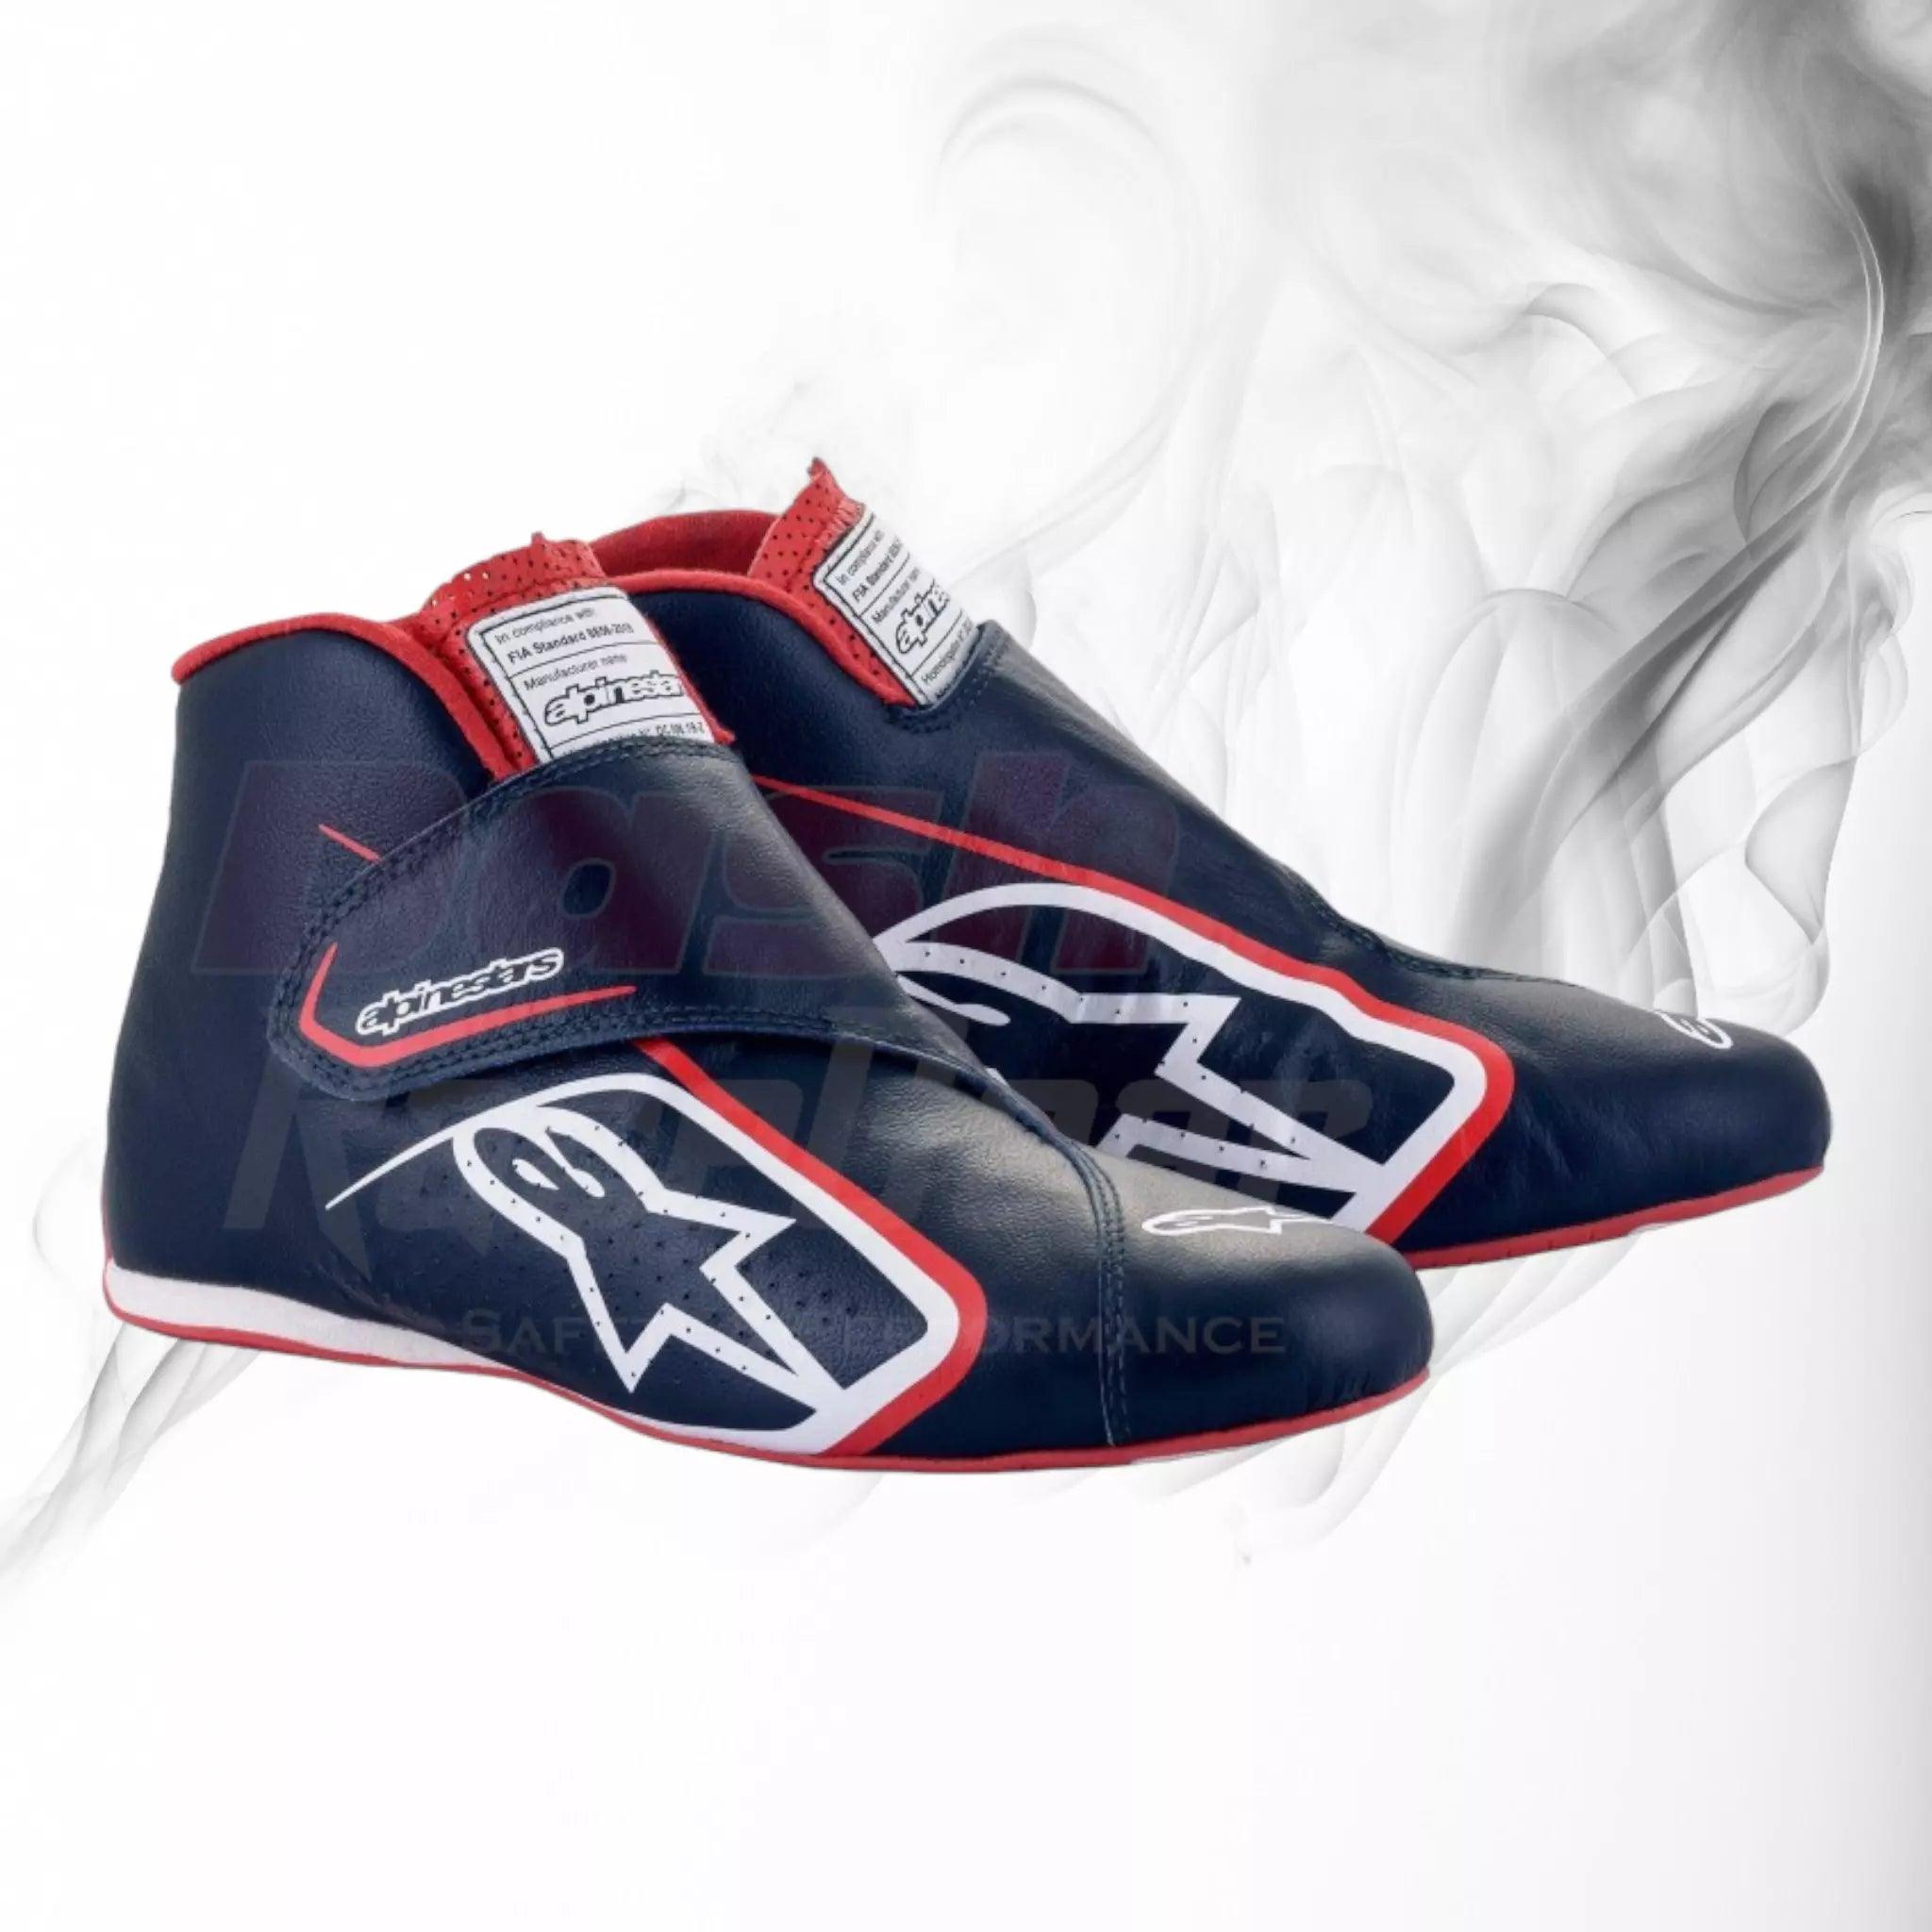 2015 Carlos Sainz Alpinestar F1 Race boots - Dash Racegear 